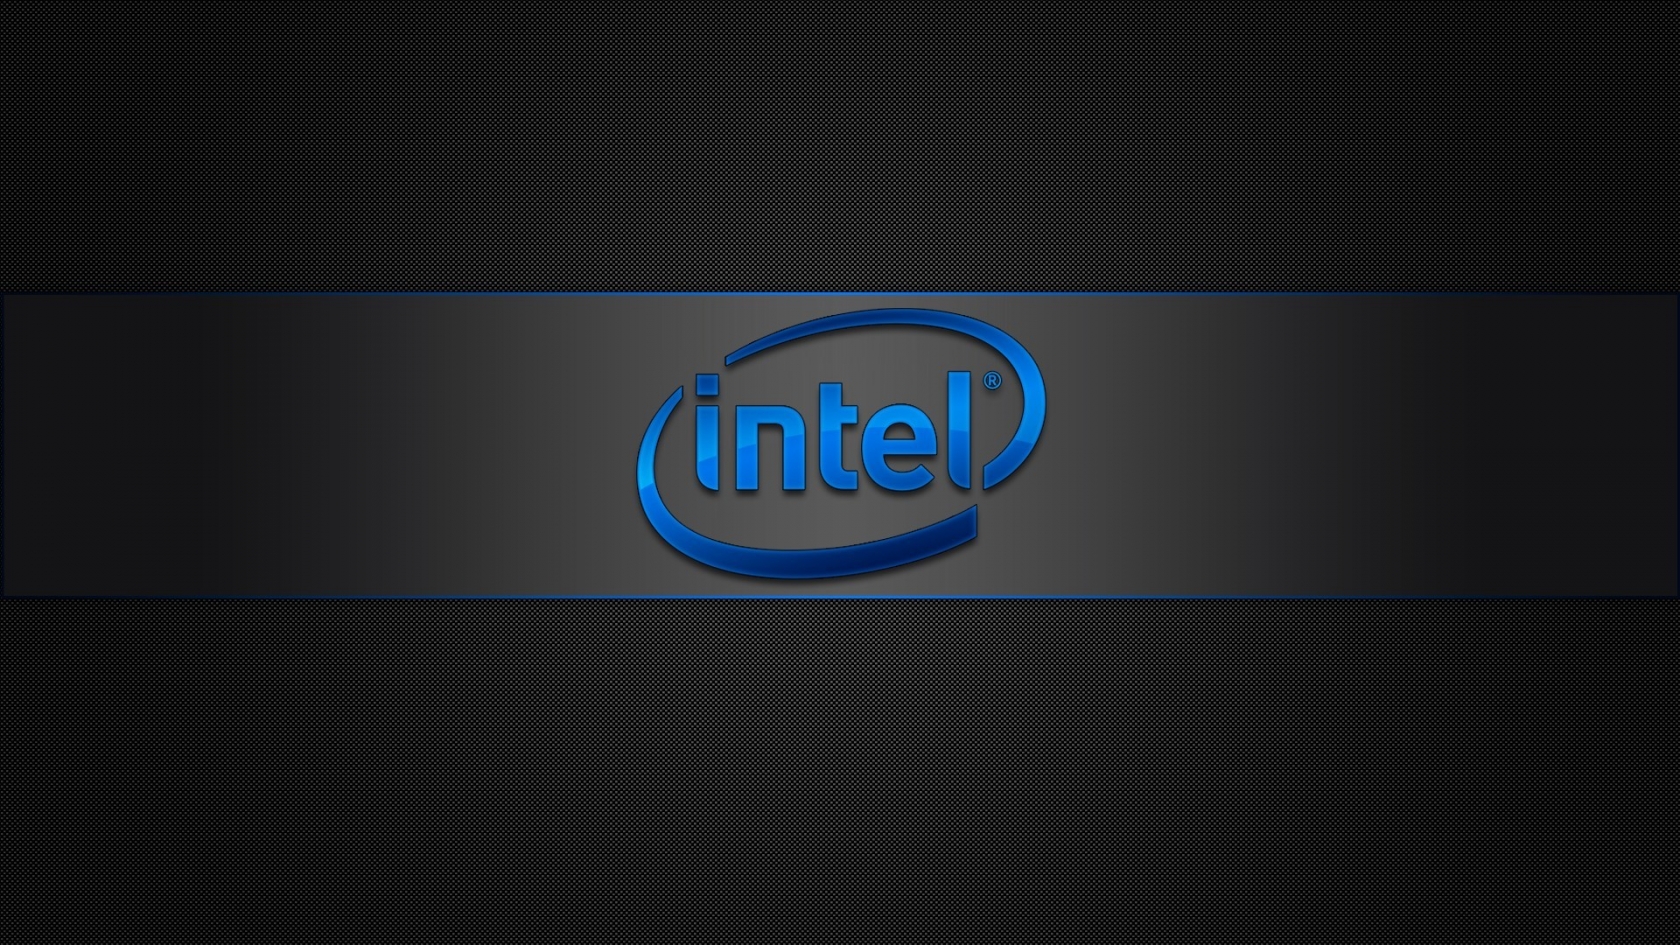 Intel for 1680 x 945 HDTV resolution